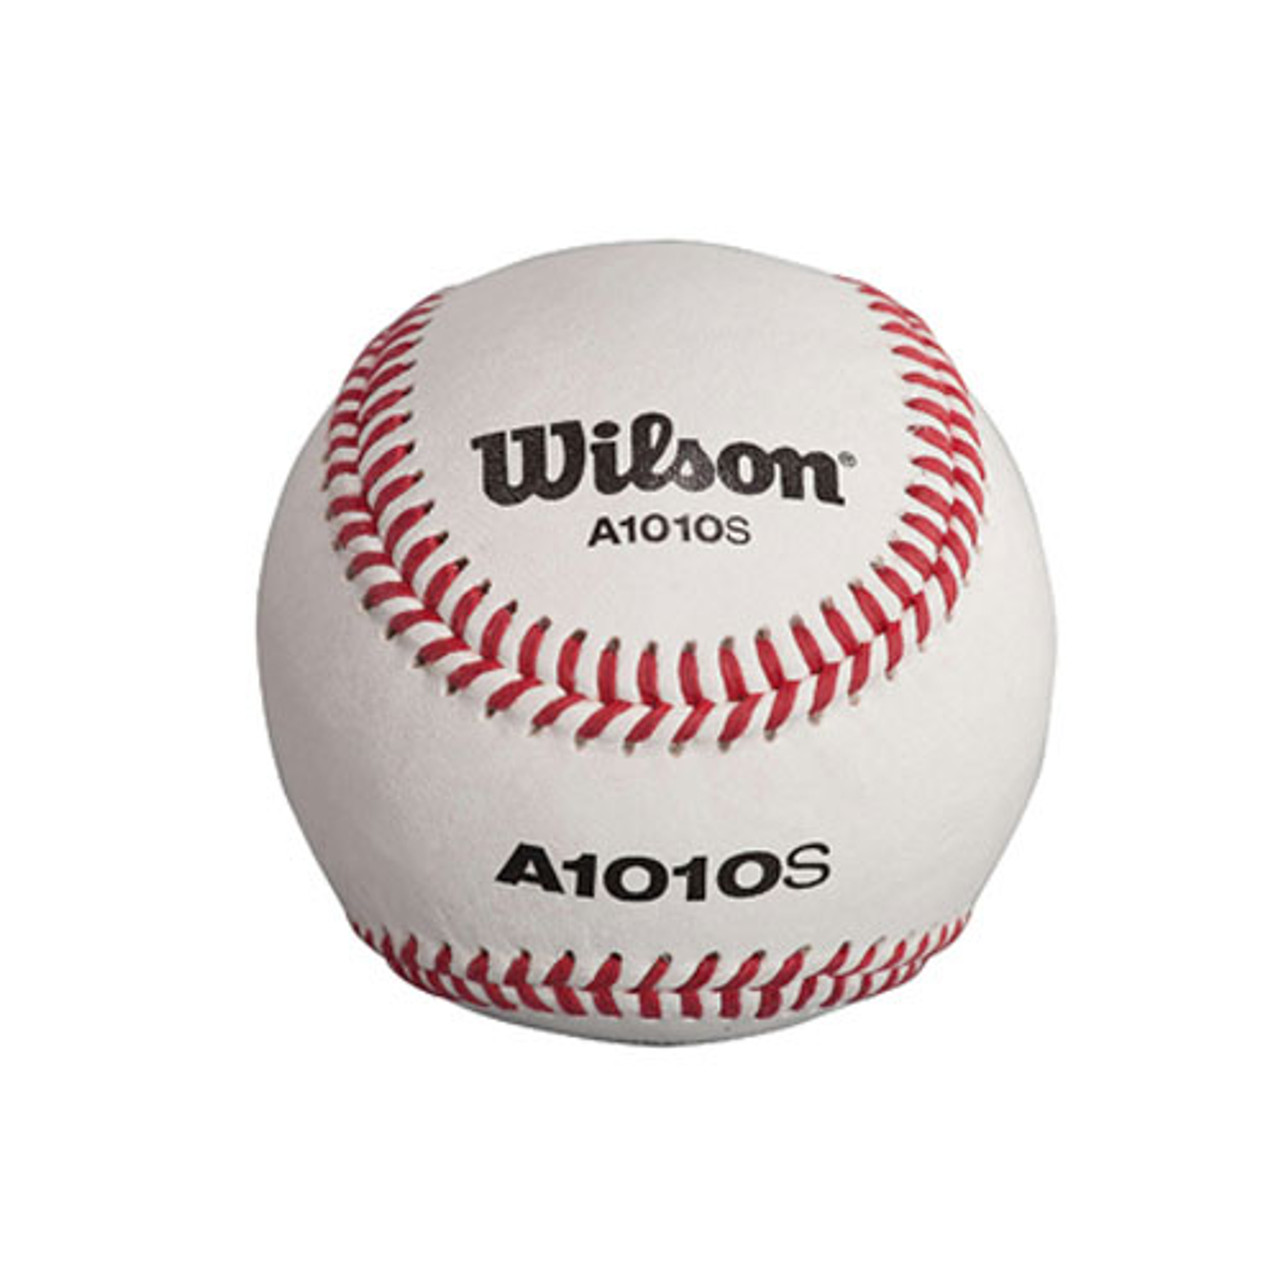 A1010 Pro Series SST Baseballs 1 DZ